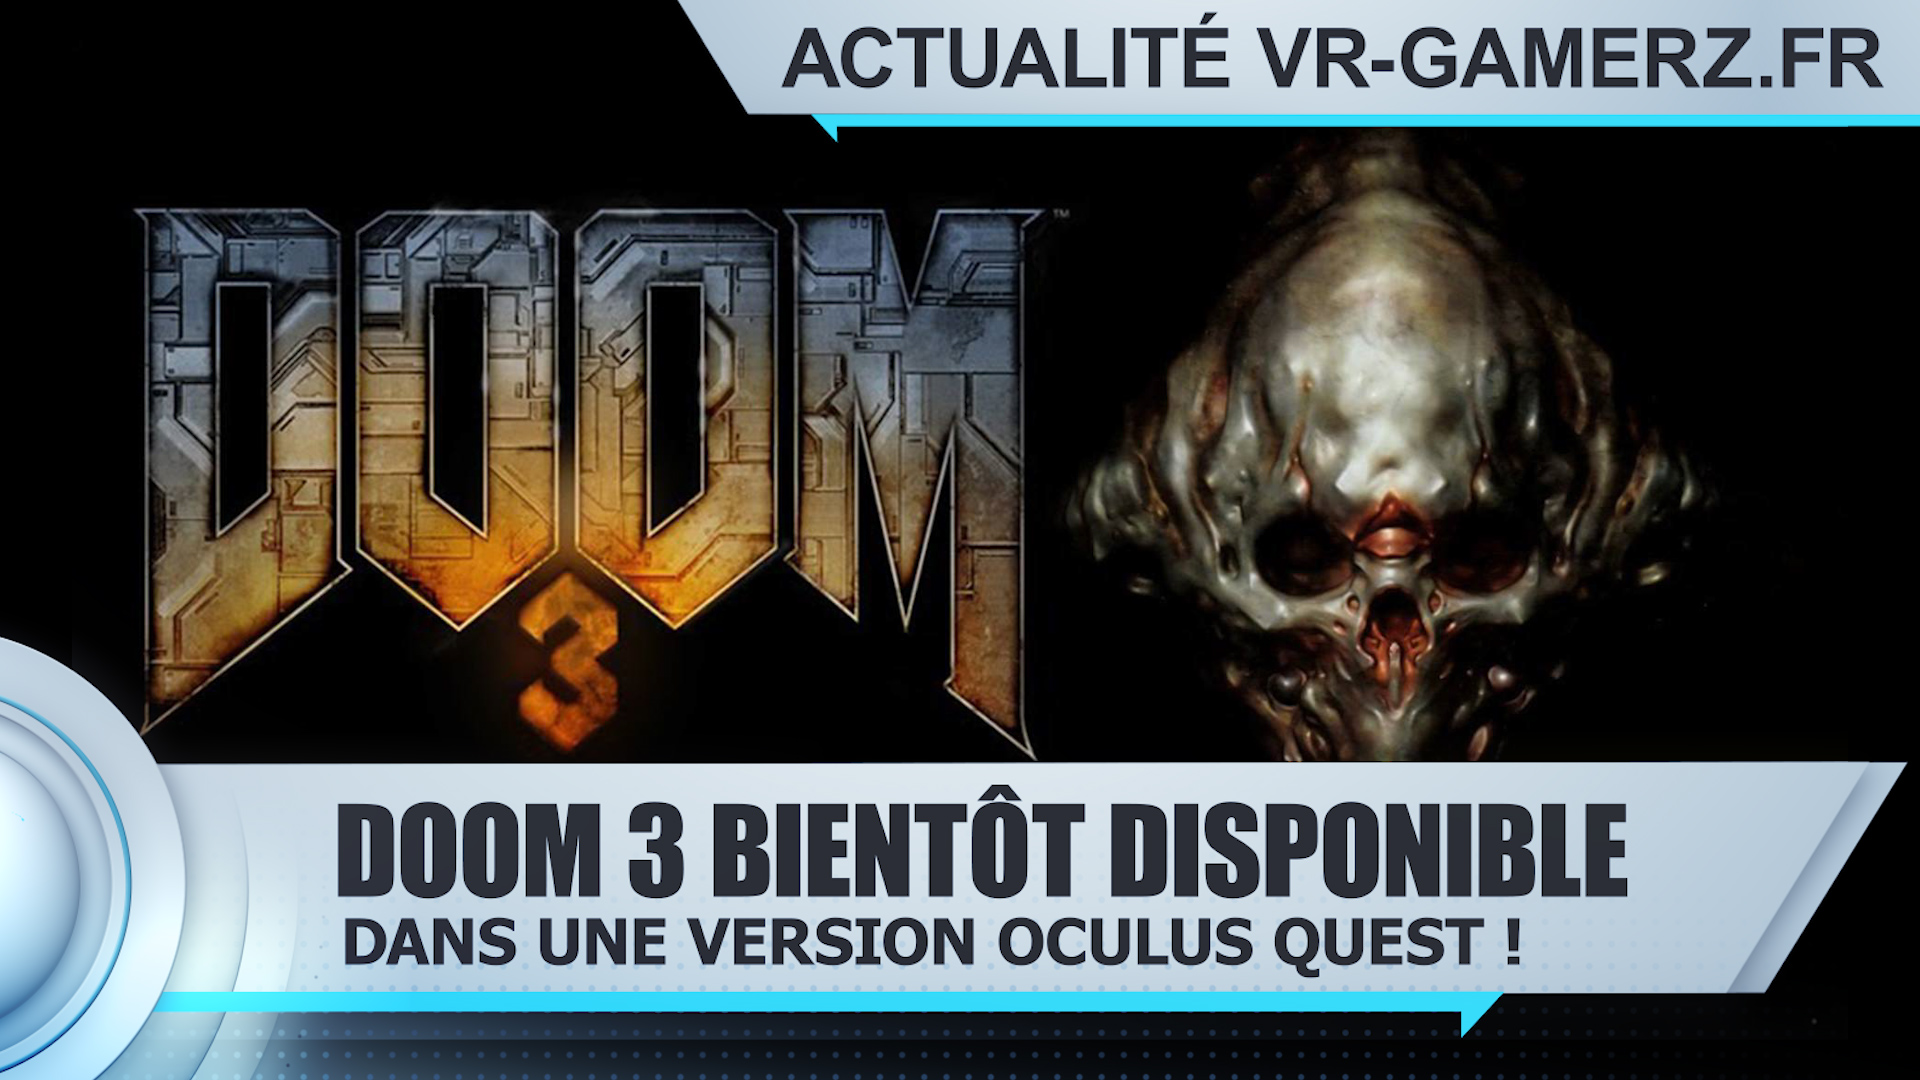 Doom 3 sera bientôt disponible sur Oculus quest